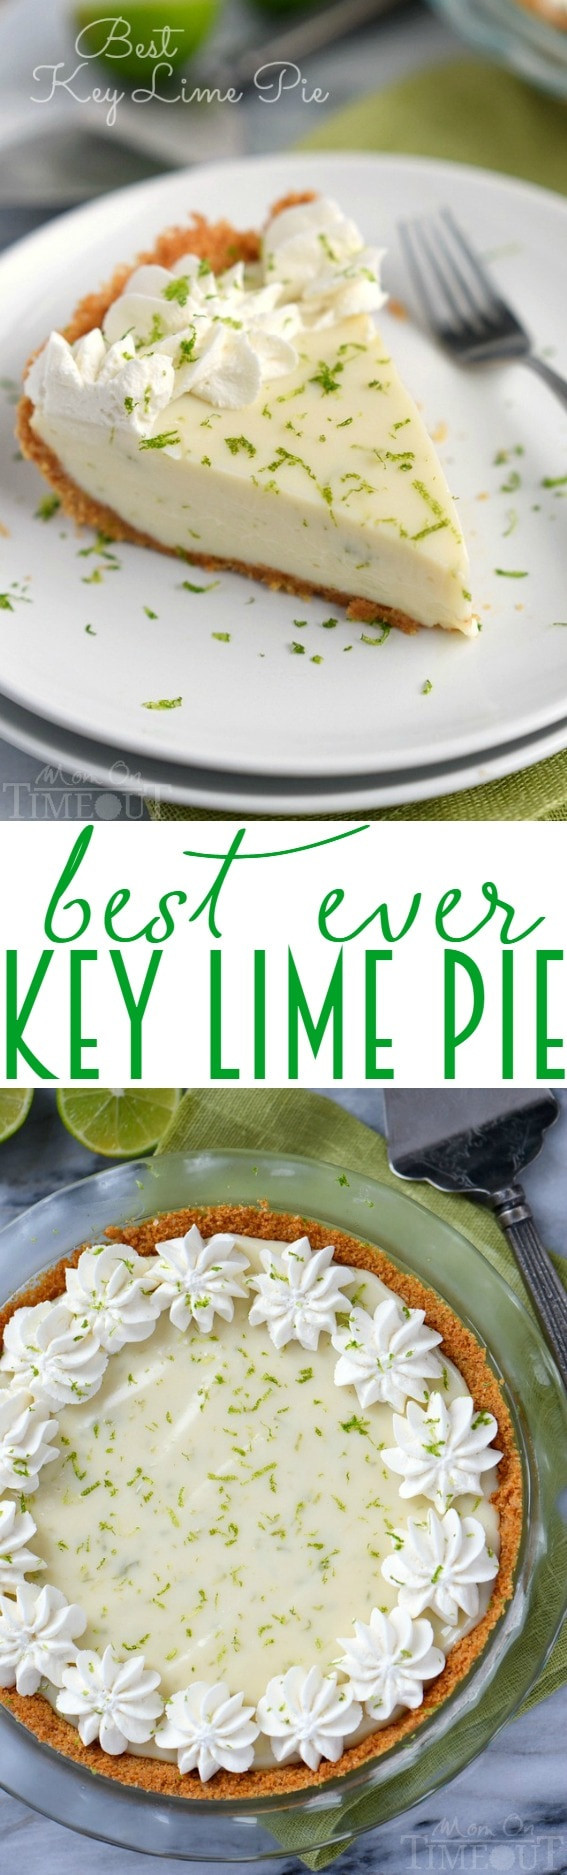 Easy Key Lime Pie
 Best Key Lime Pie Mom Timeout